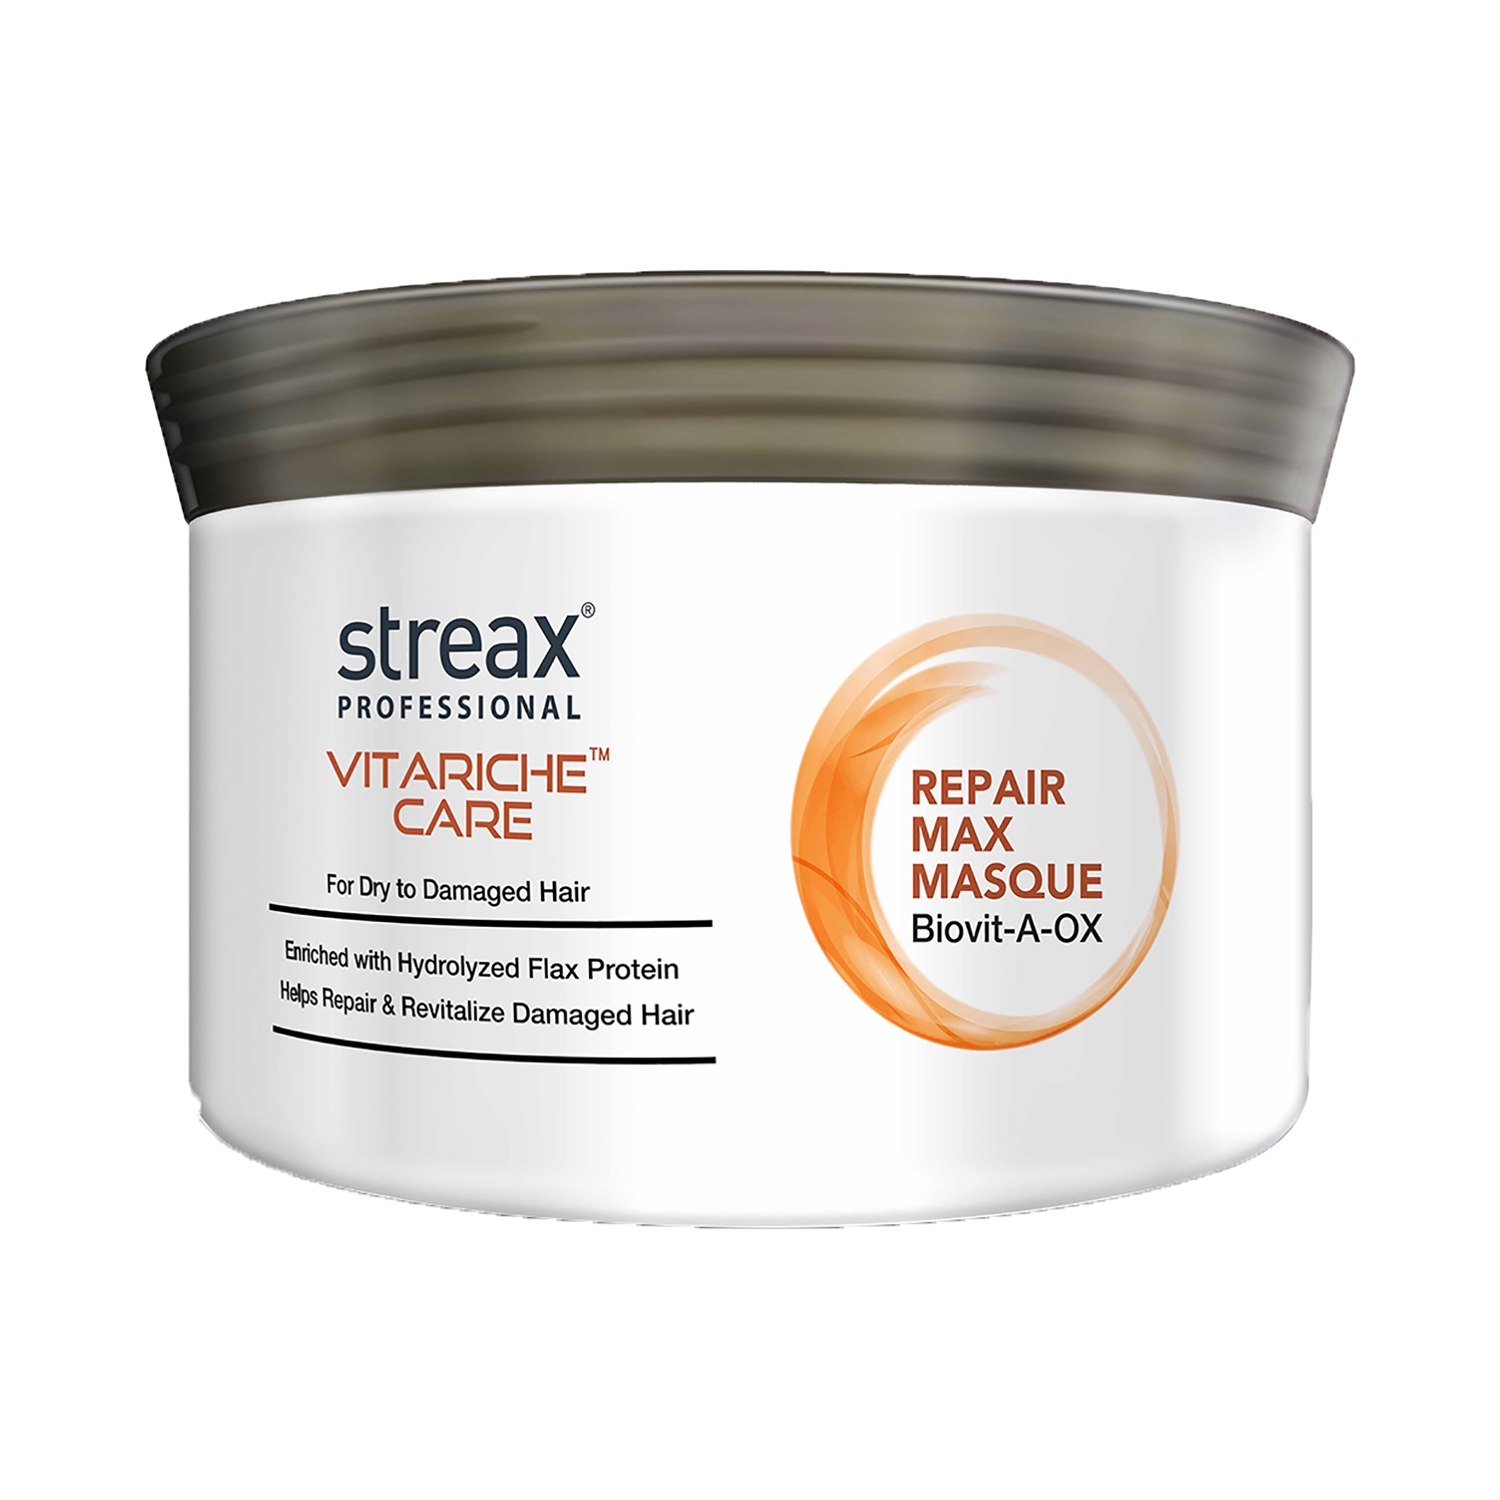 Streax Professional Vitarich Care Repair Max Masque (200g)